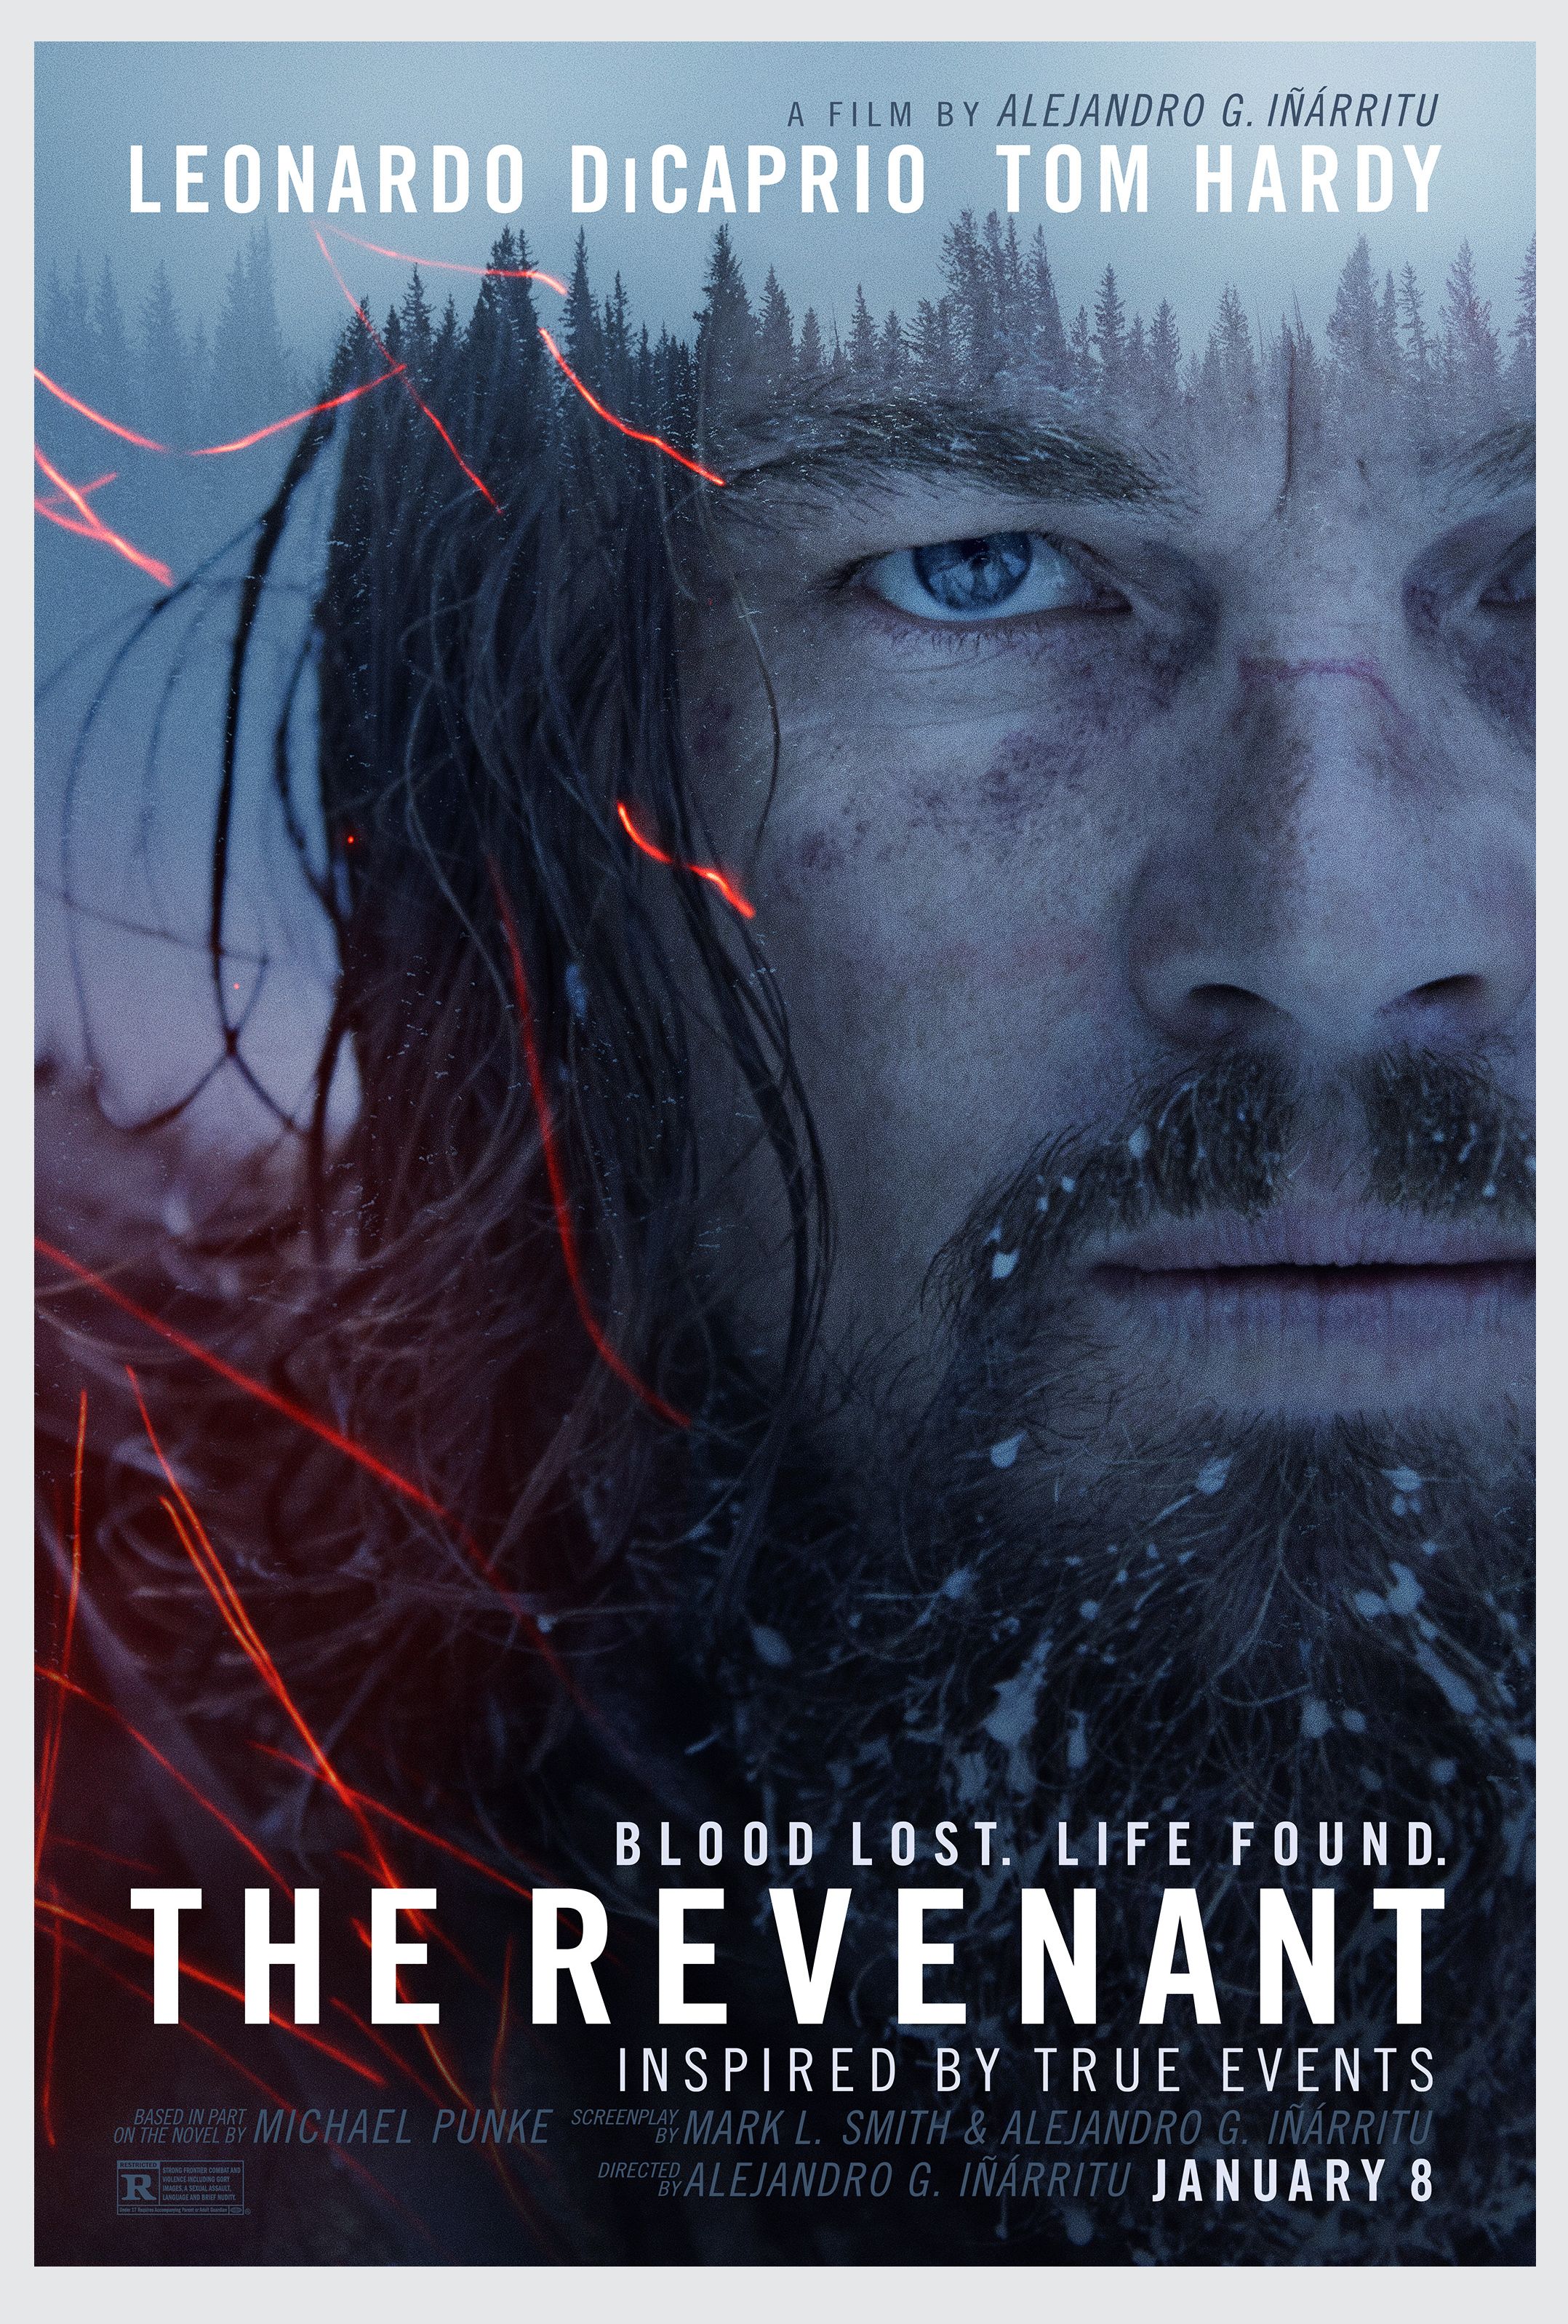 New Poster for The Revenant, Featuring Leonardo DiCaprio